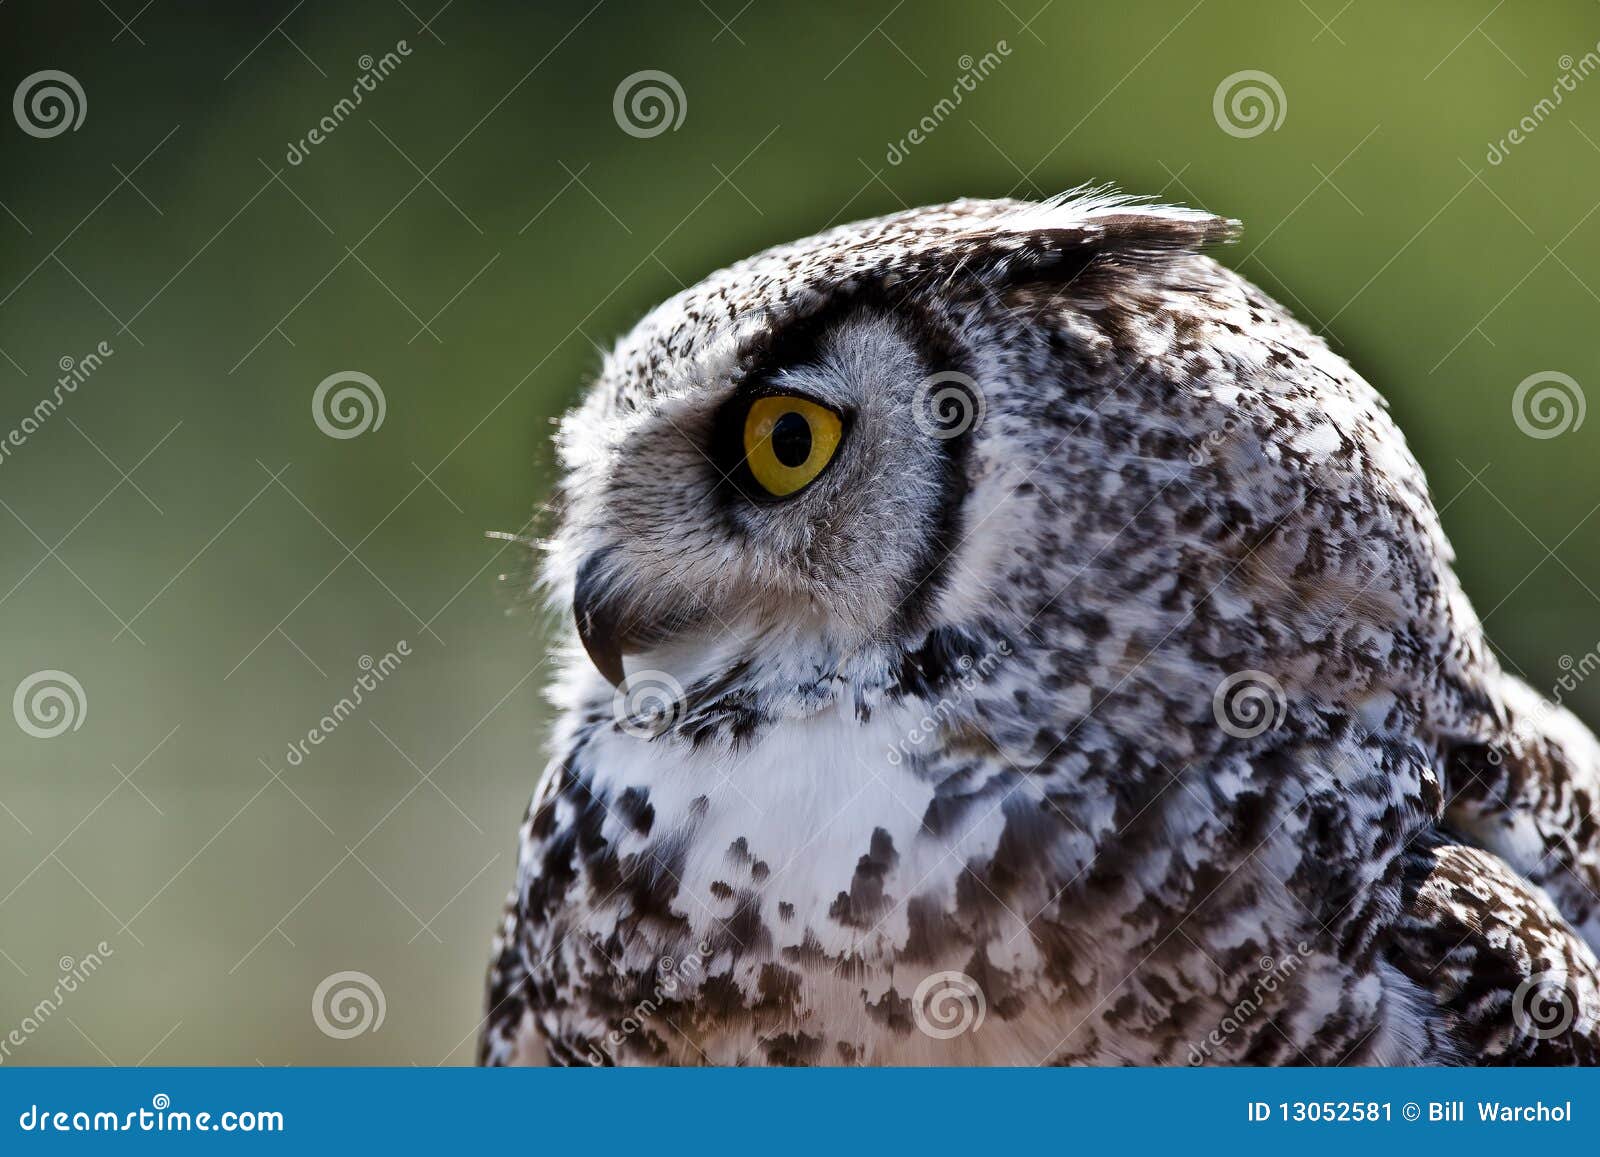 Great horned owl stock image. Image of beaks, floats - 13052581